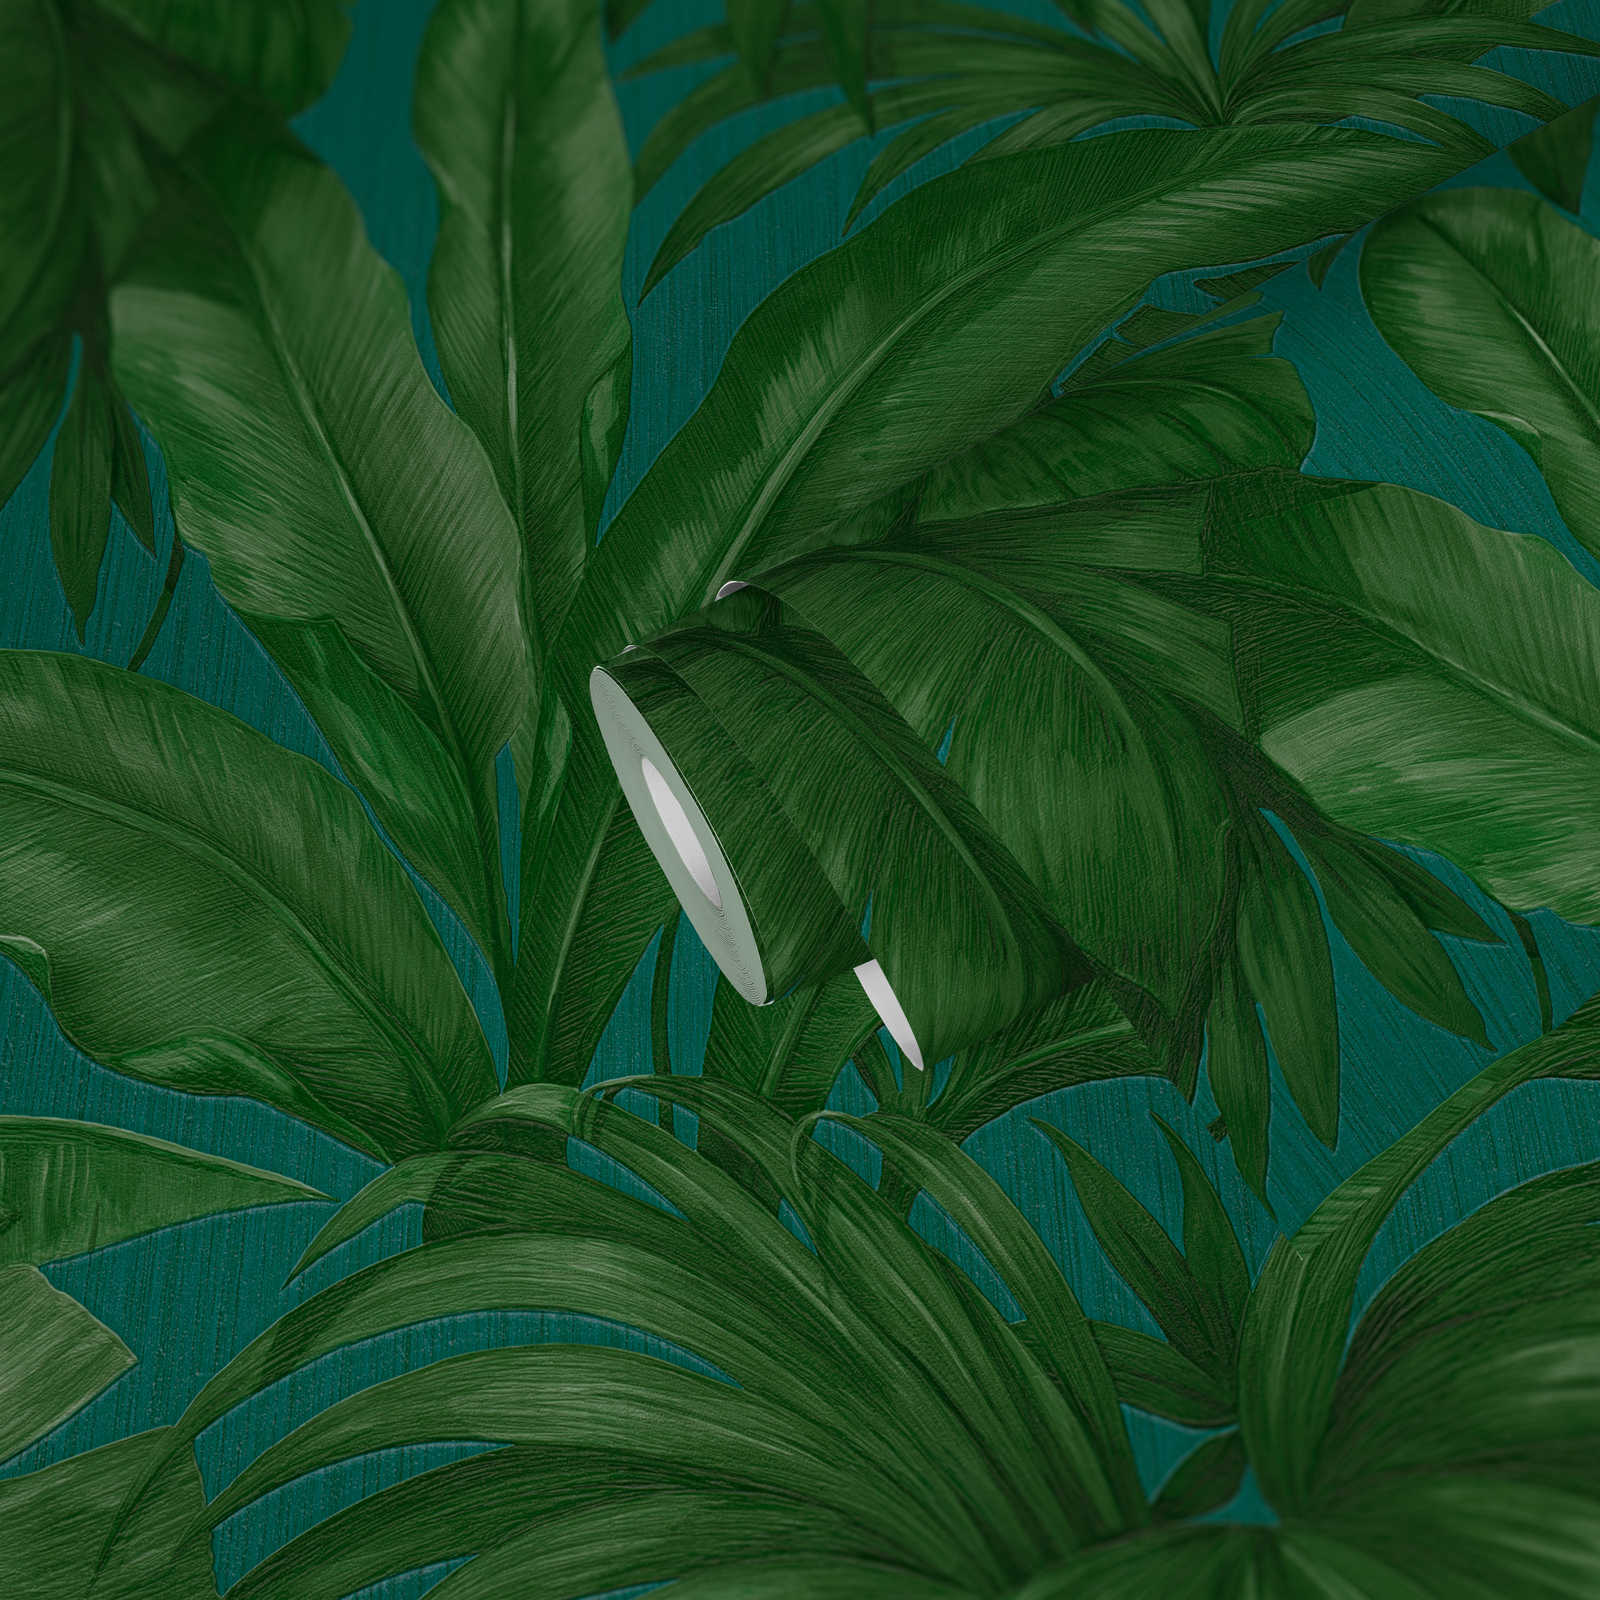             Papier peint jungle VERSACE motif feuilles de palmier - vert
        